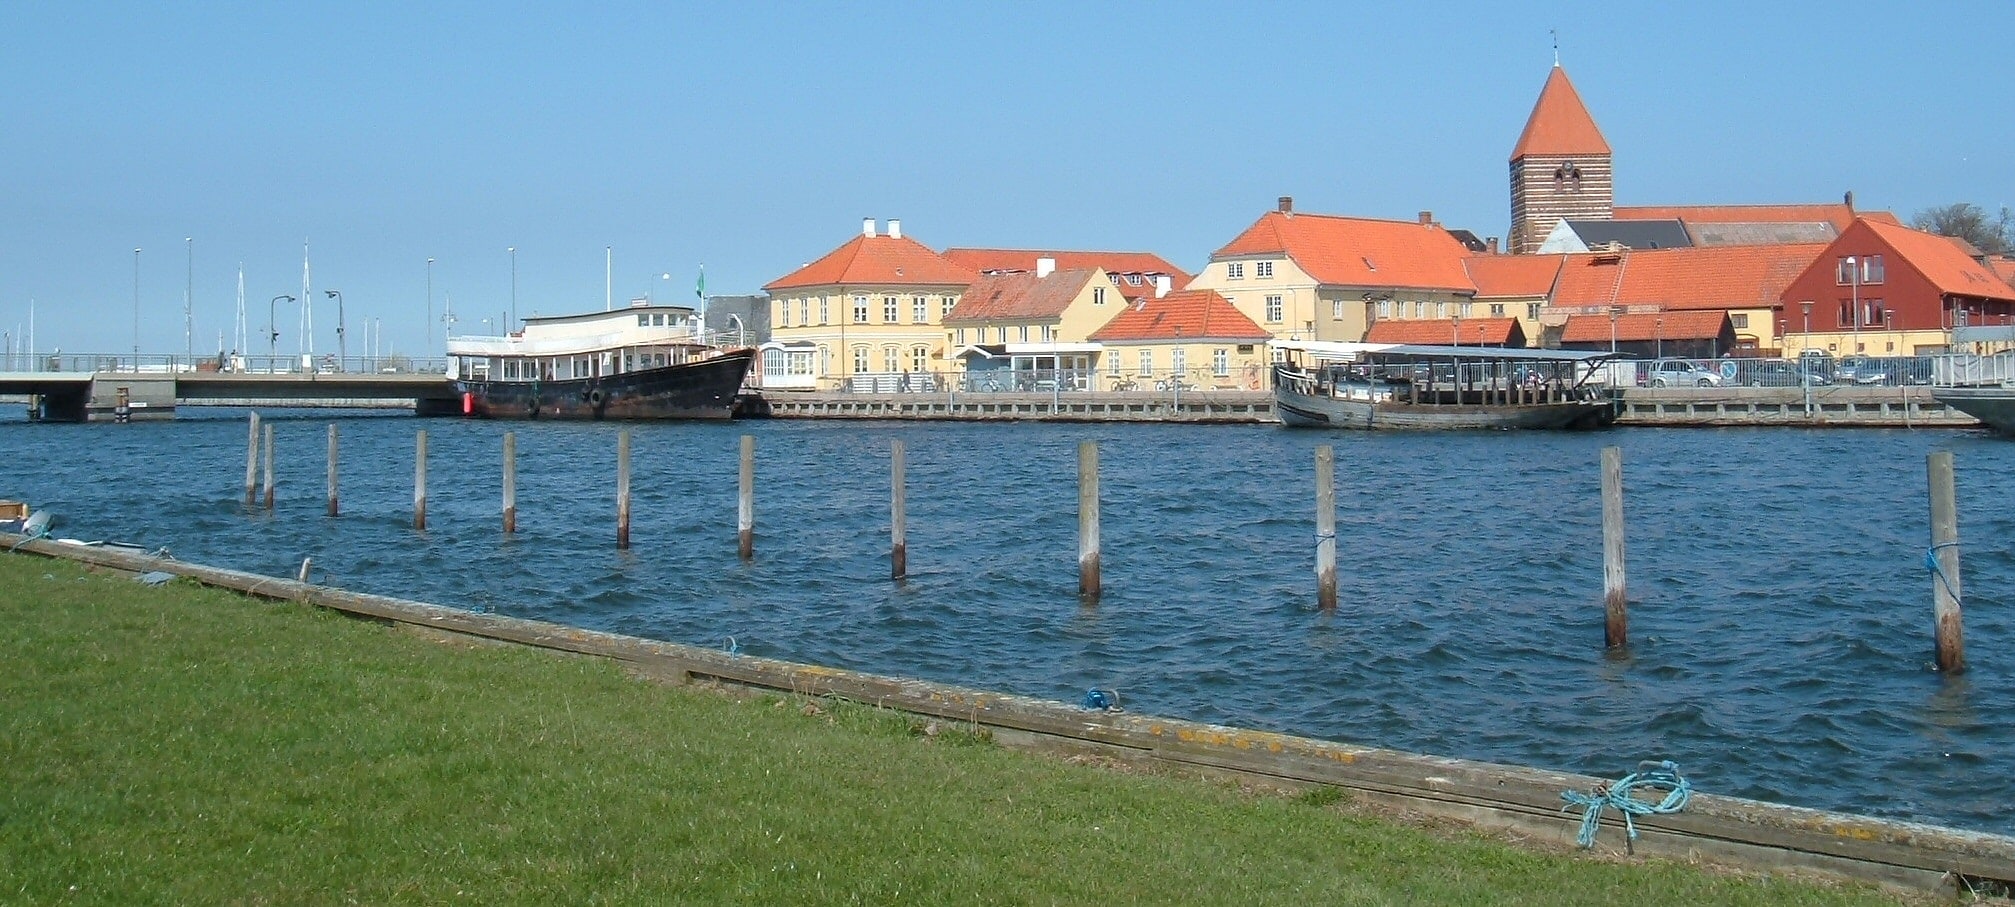 Stege, Danemark